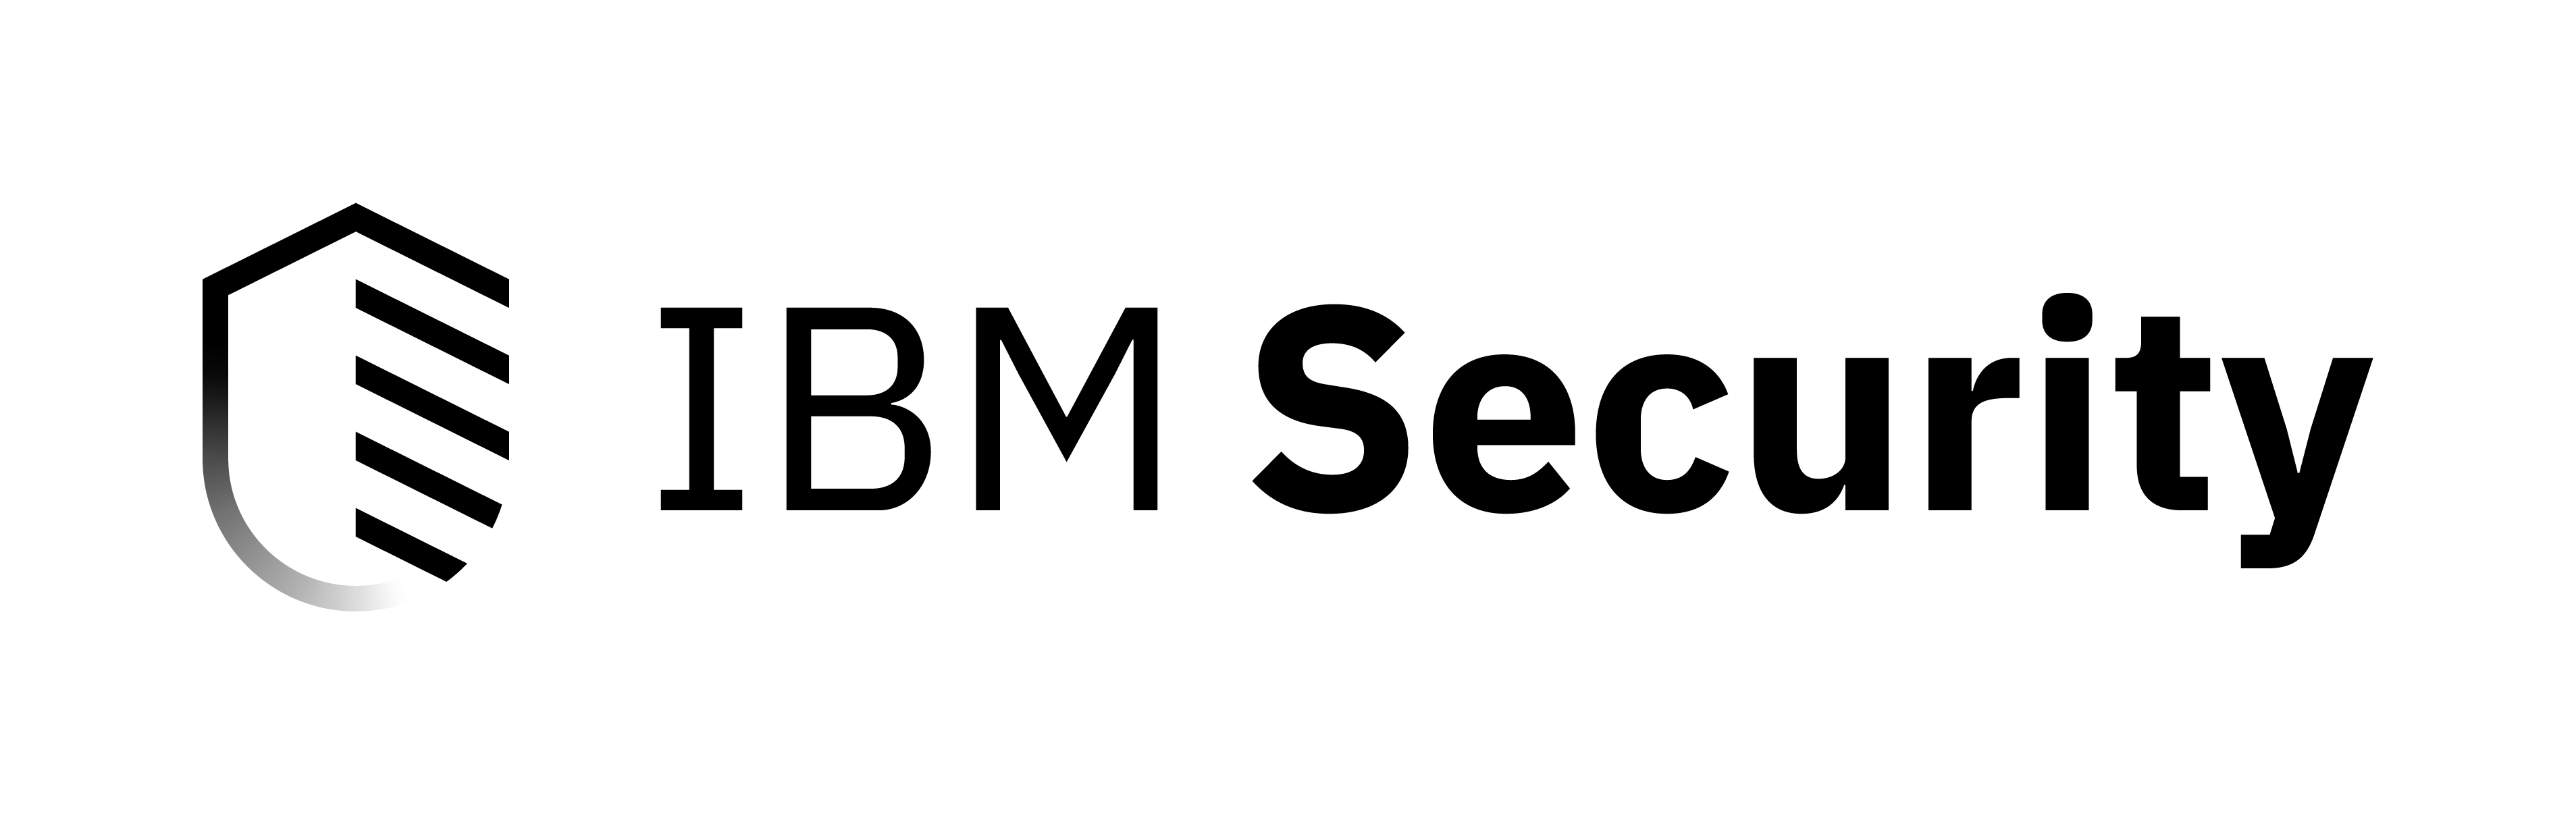 IBM Security lockup